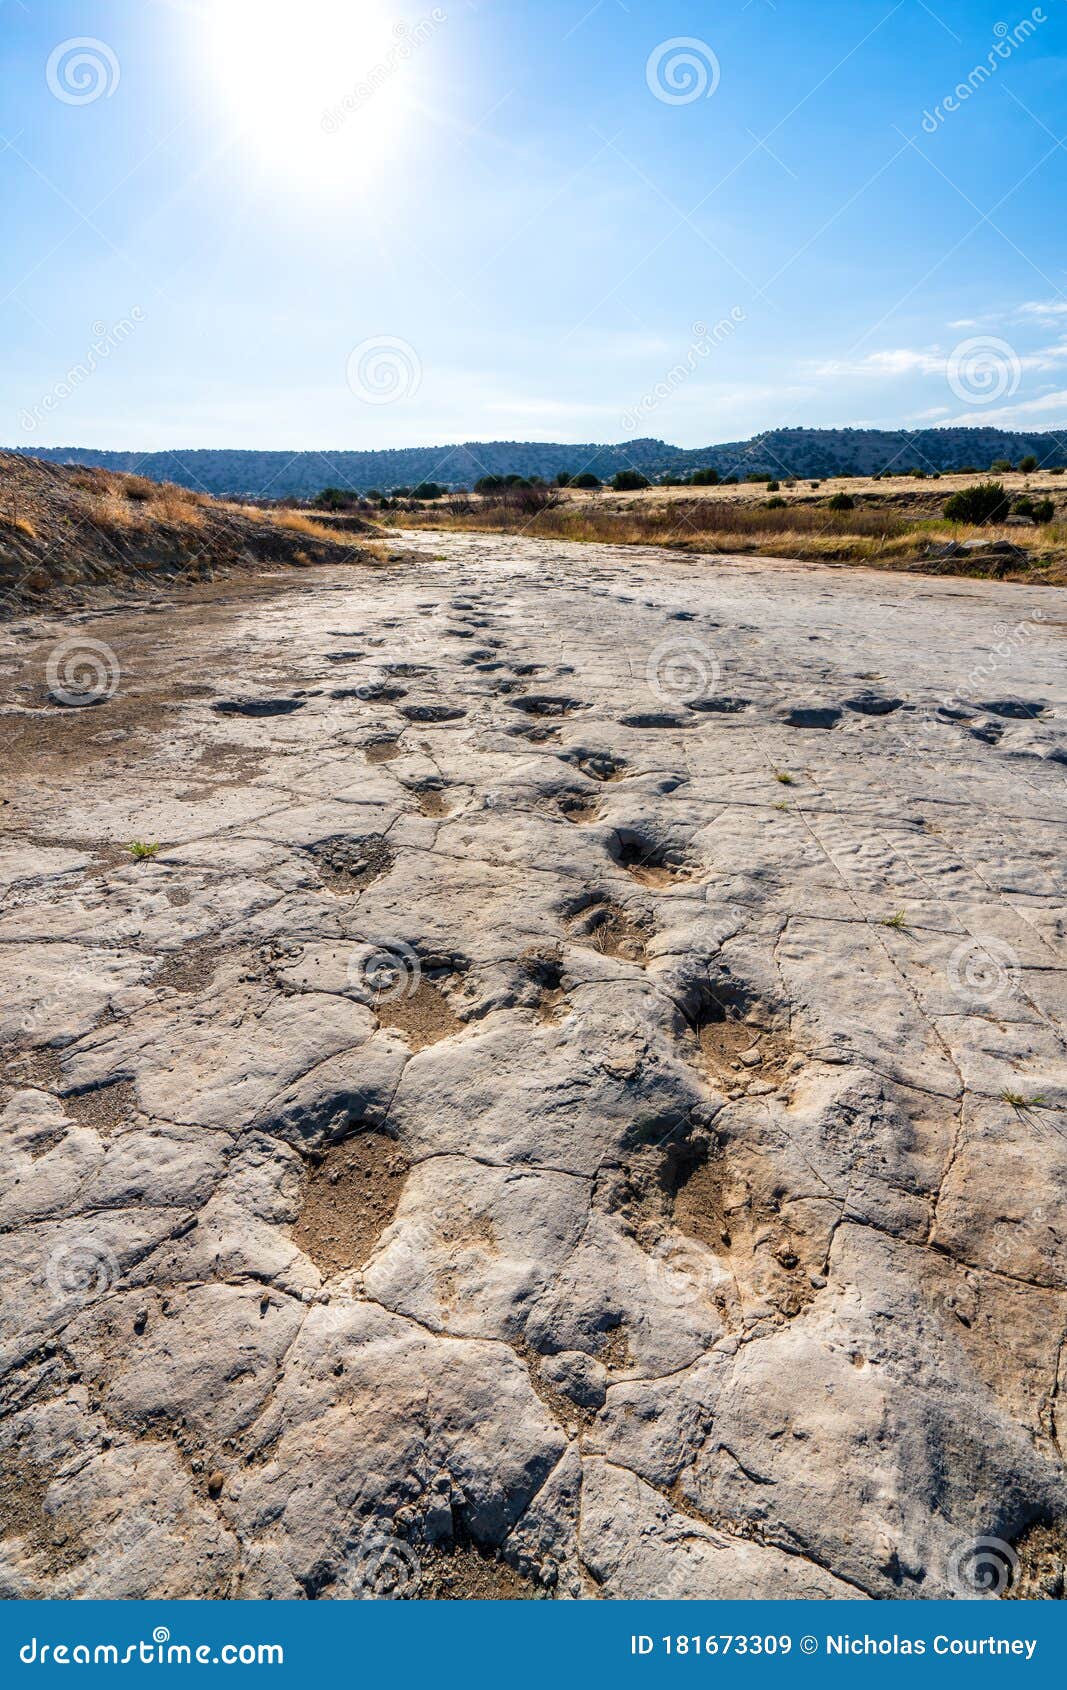 dinosaur tracks of comanche national grassland.  la junta, colorado.